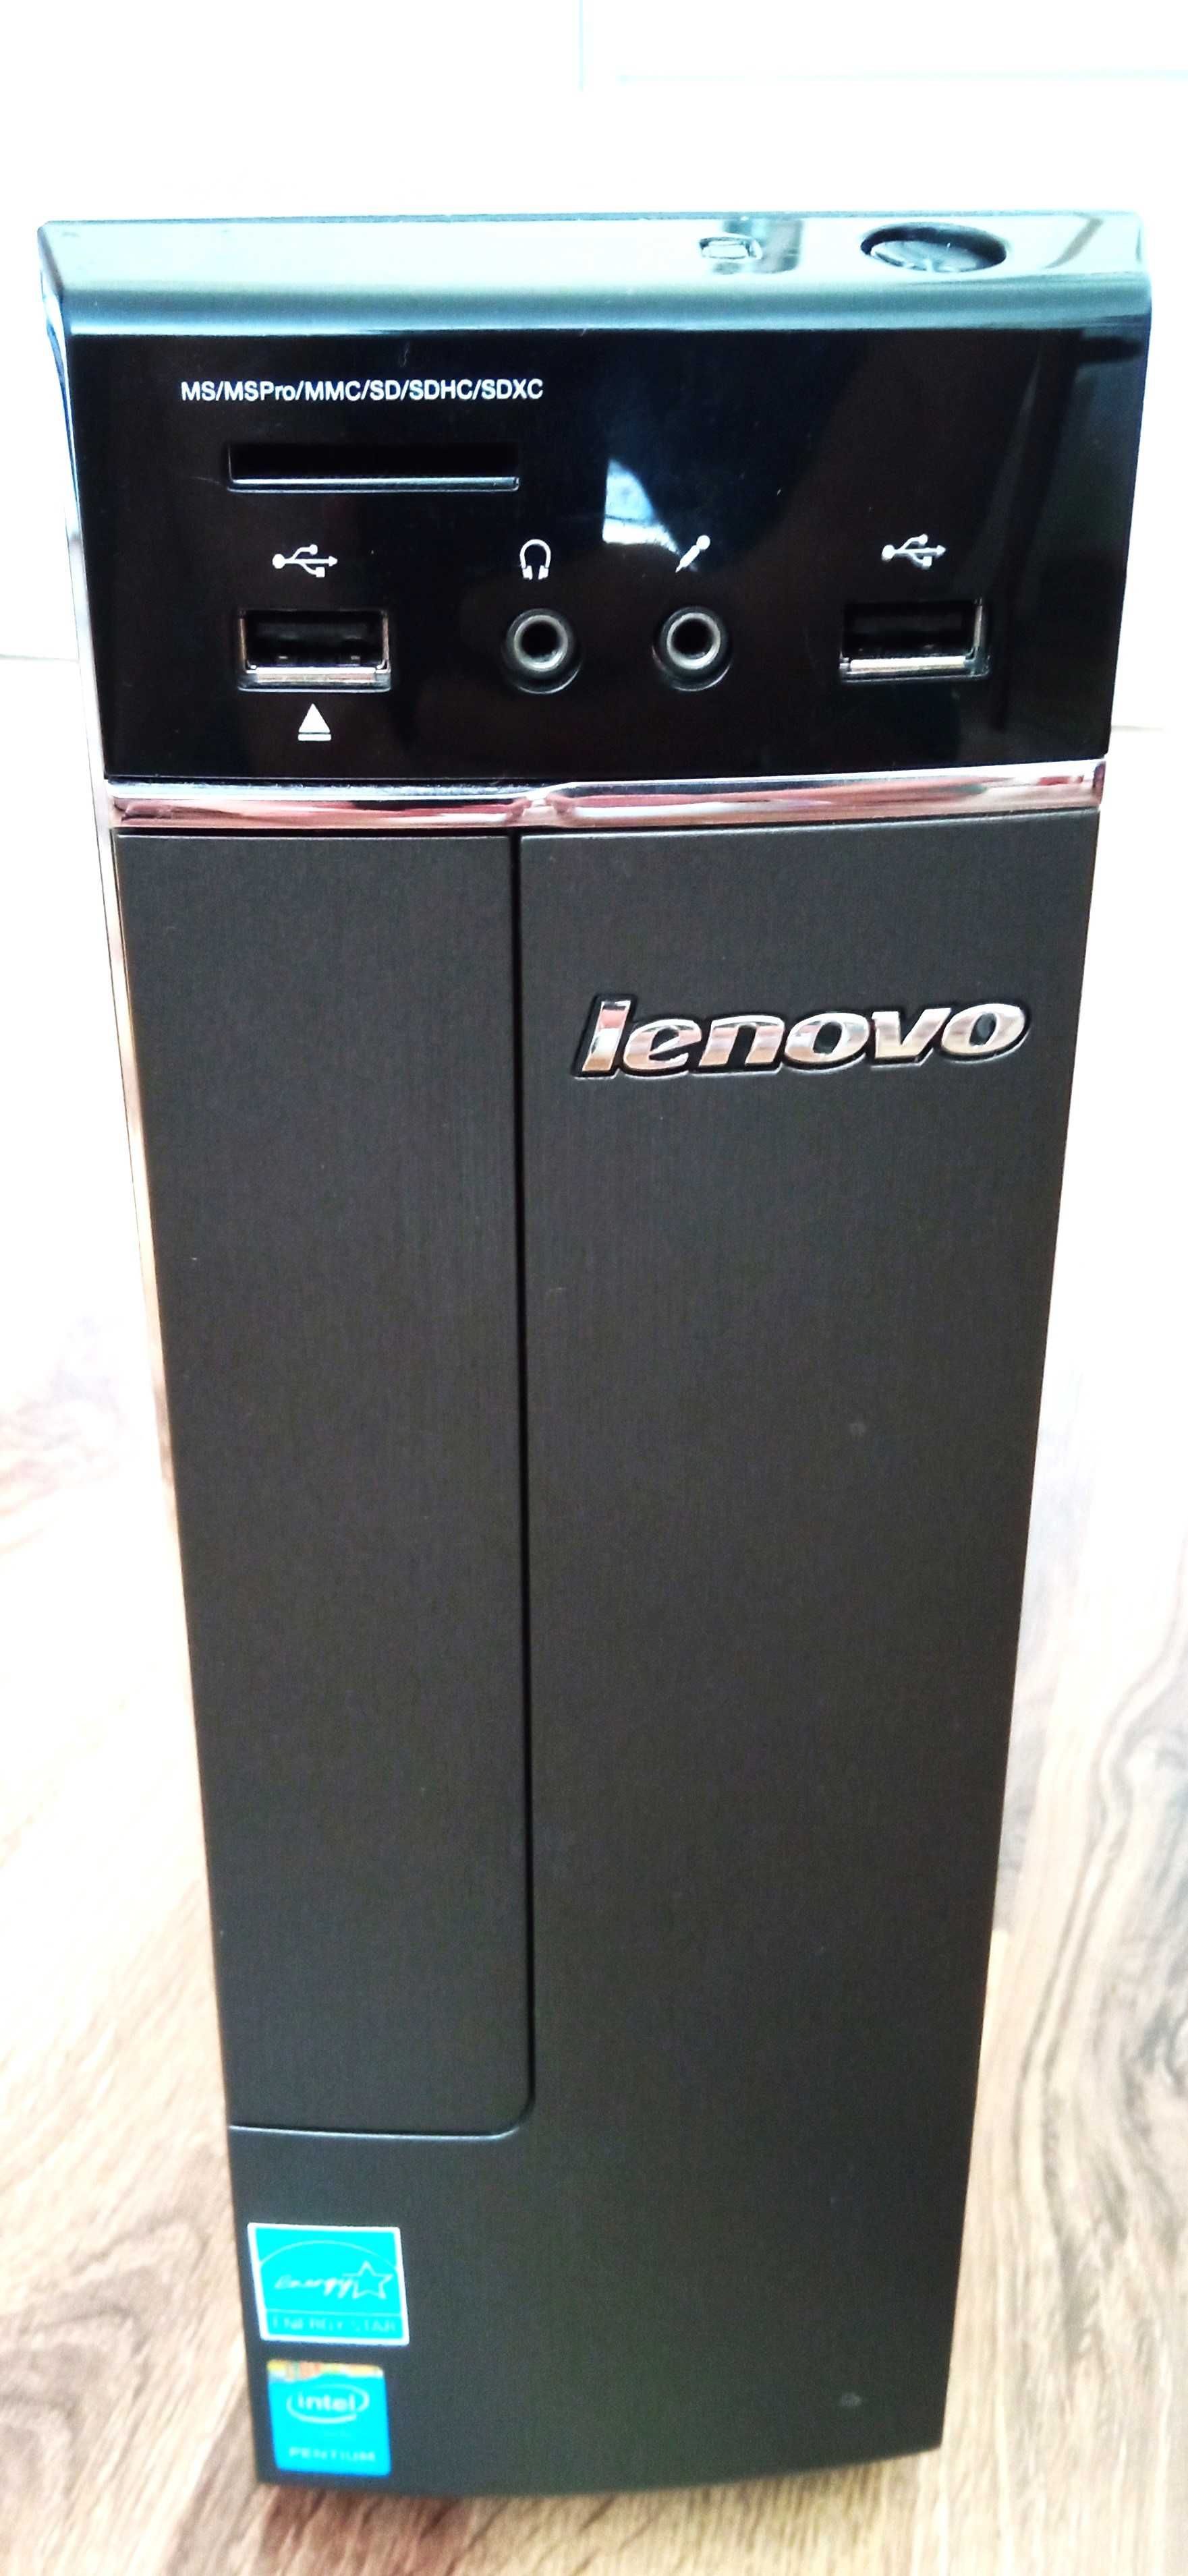 Płyta główna LENOVO BTDD-LT2 V1.0 + Procesor Intel Pentium J2900